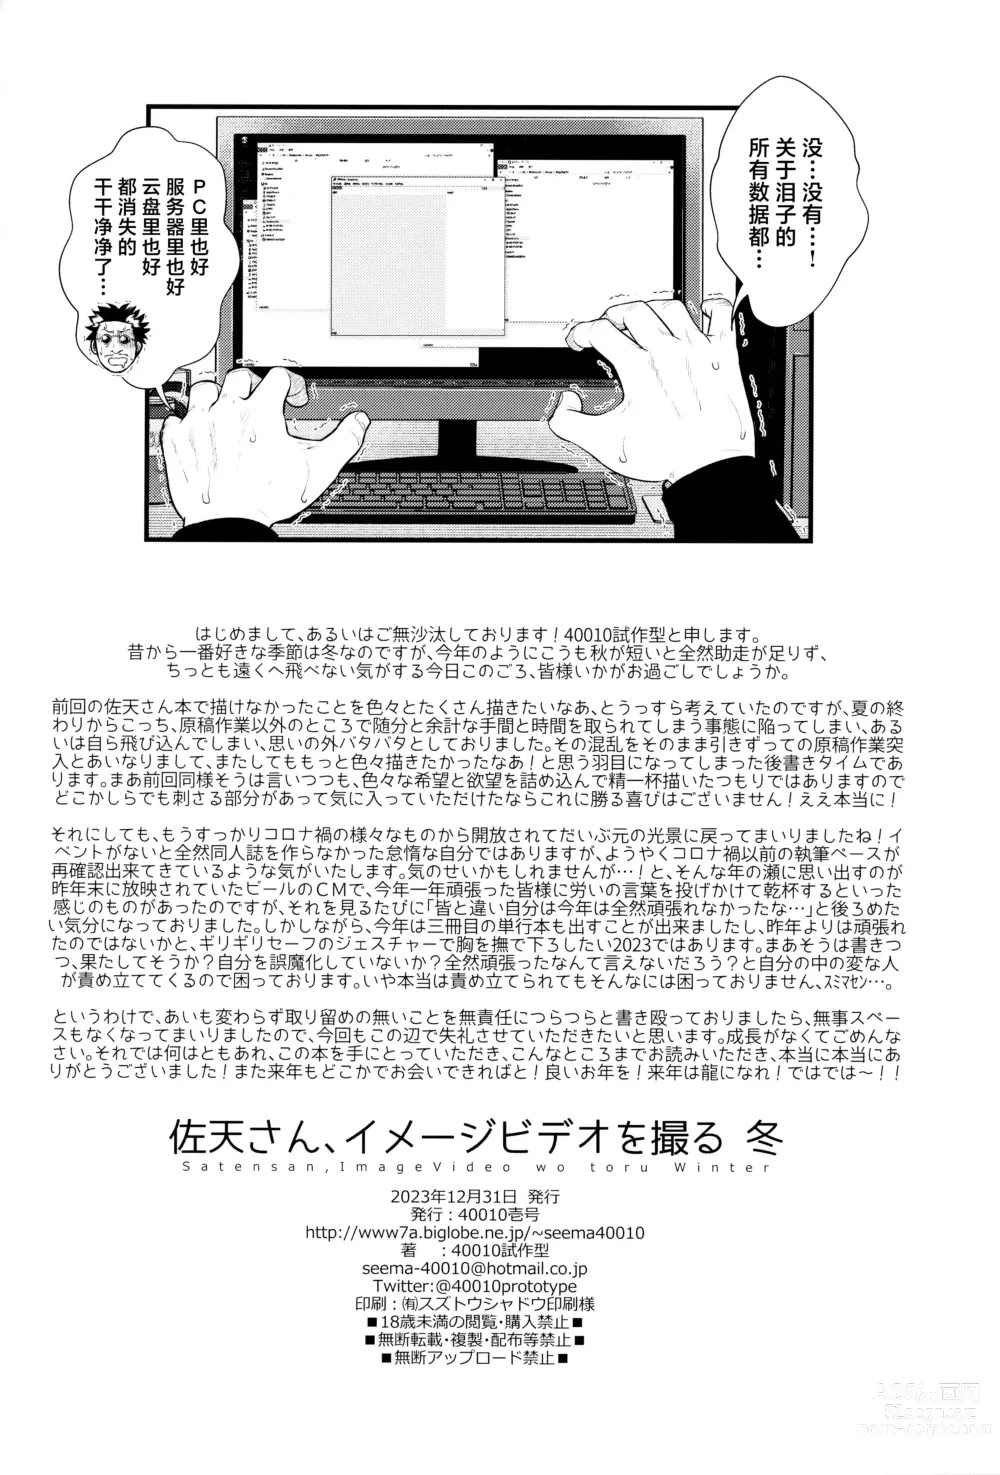 Page 31 of doujinshi Saten-san, Image Video o Toru Winter